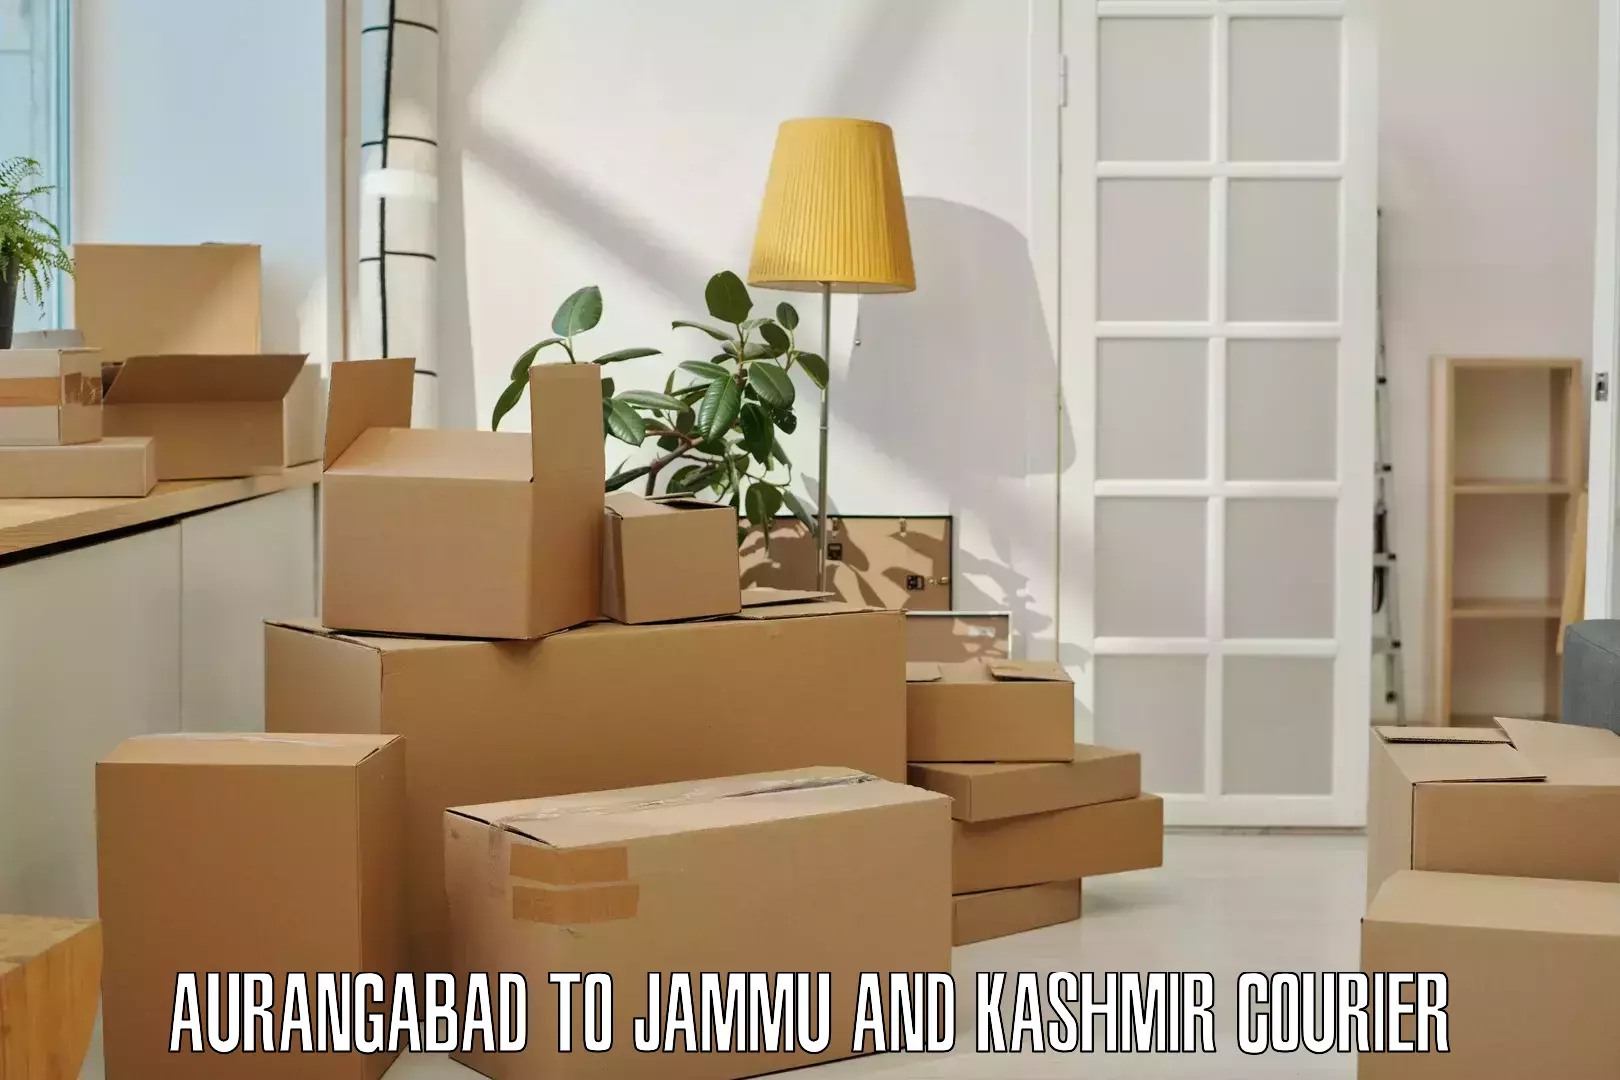 Courier service comparison Aurangabad to Jammu and Kashmir